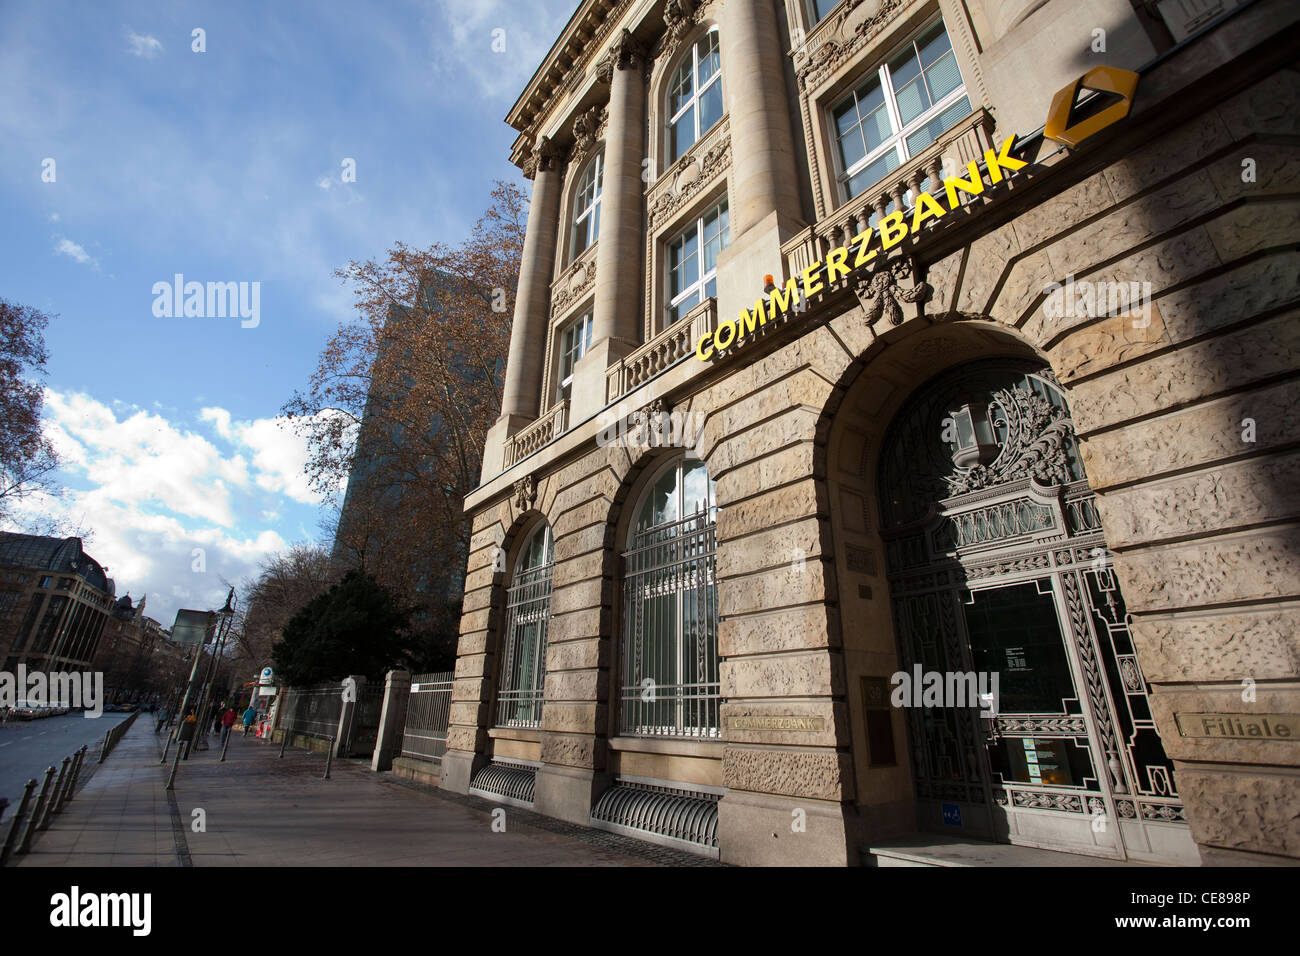 La Commerzbank Francfort Allemagne. Photo:Jeff Gilbert Banque D'Images